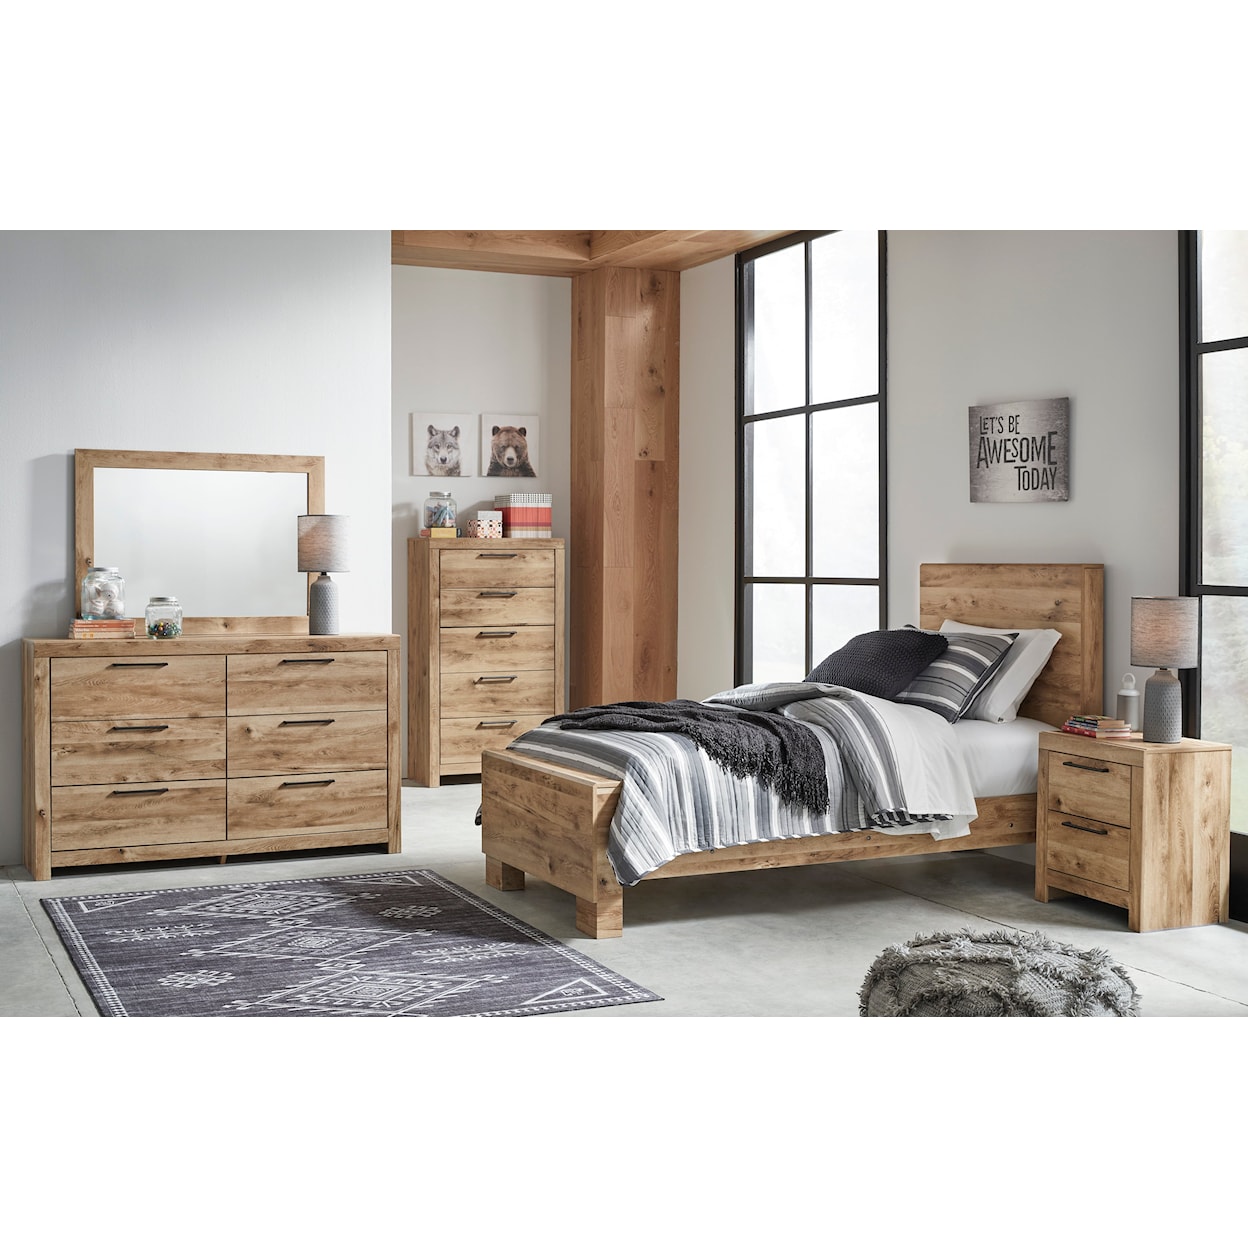 Ashley Furniture Signature Design Hyanna Twin Bedroom Set